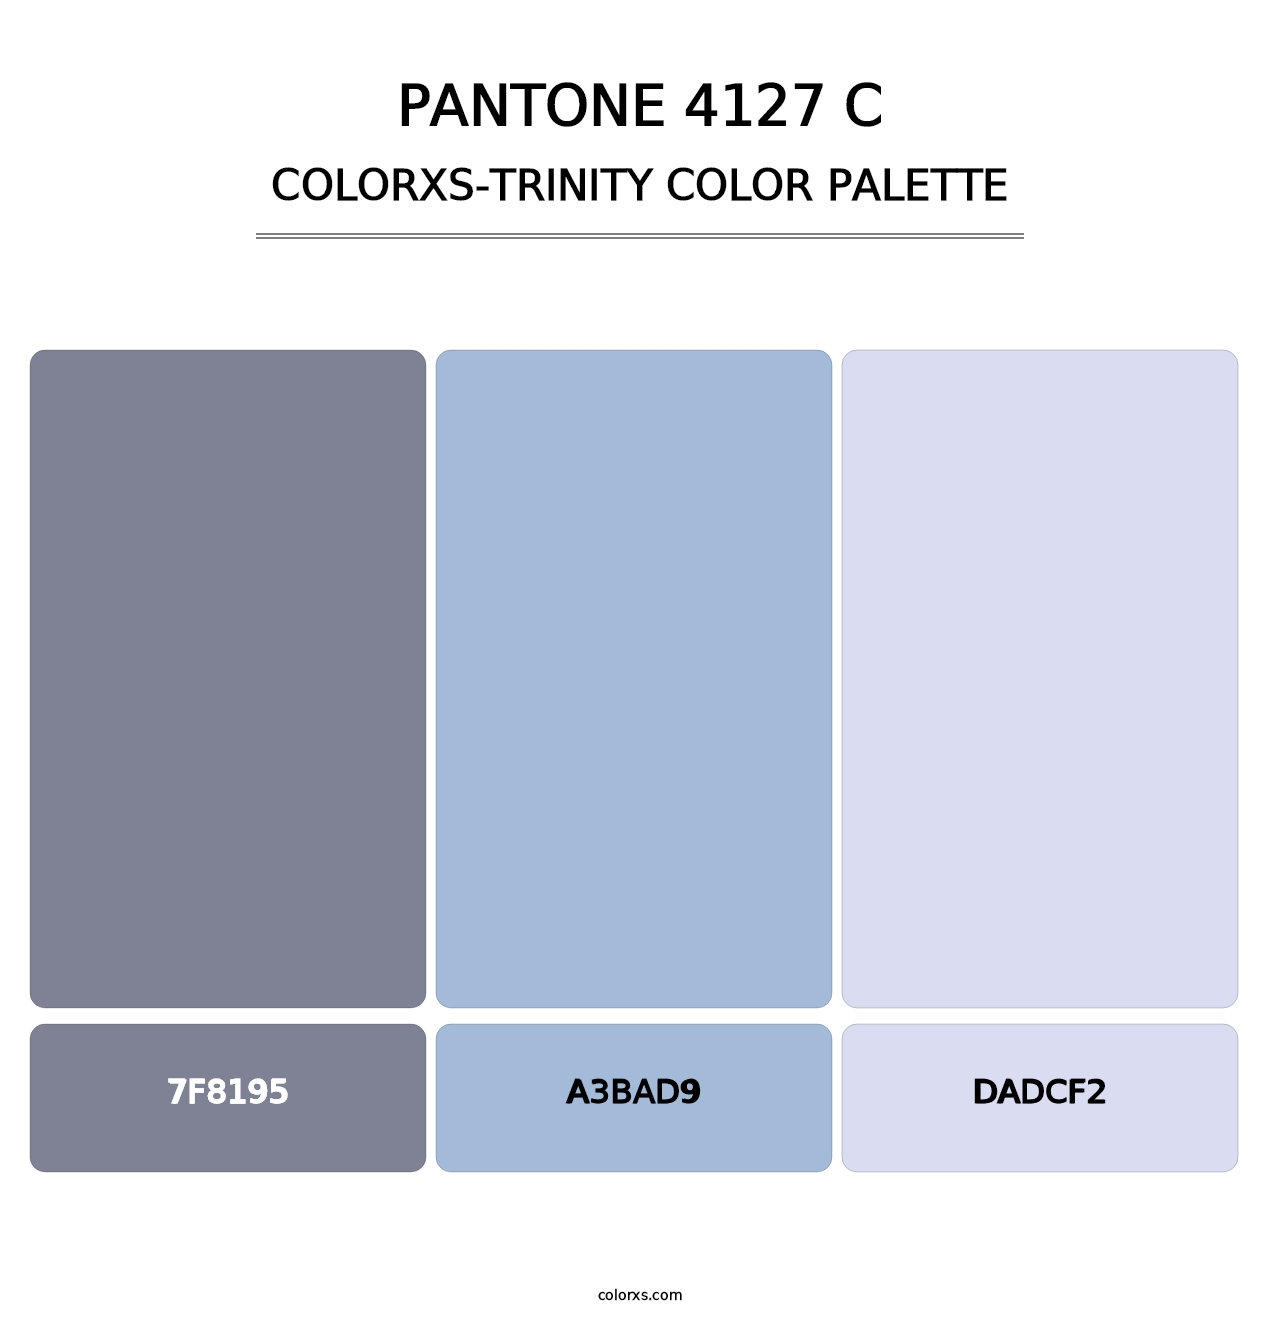 PANTONE 4127 C - Colorxs Trinity Palette